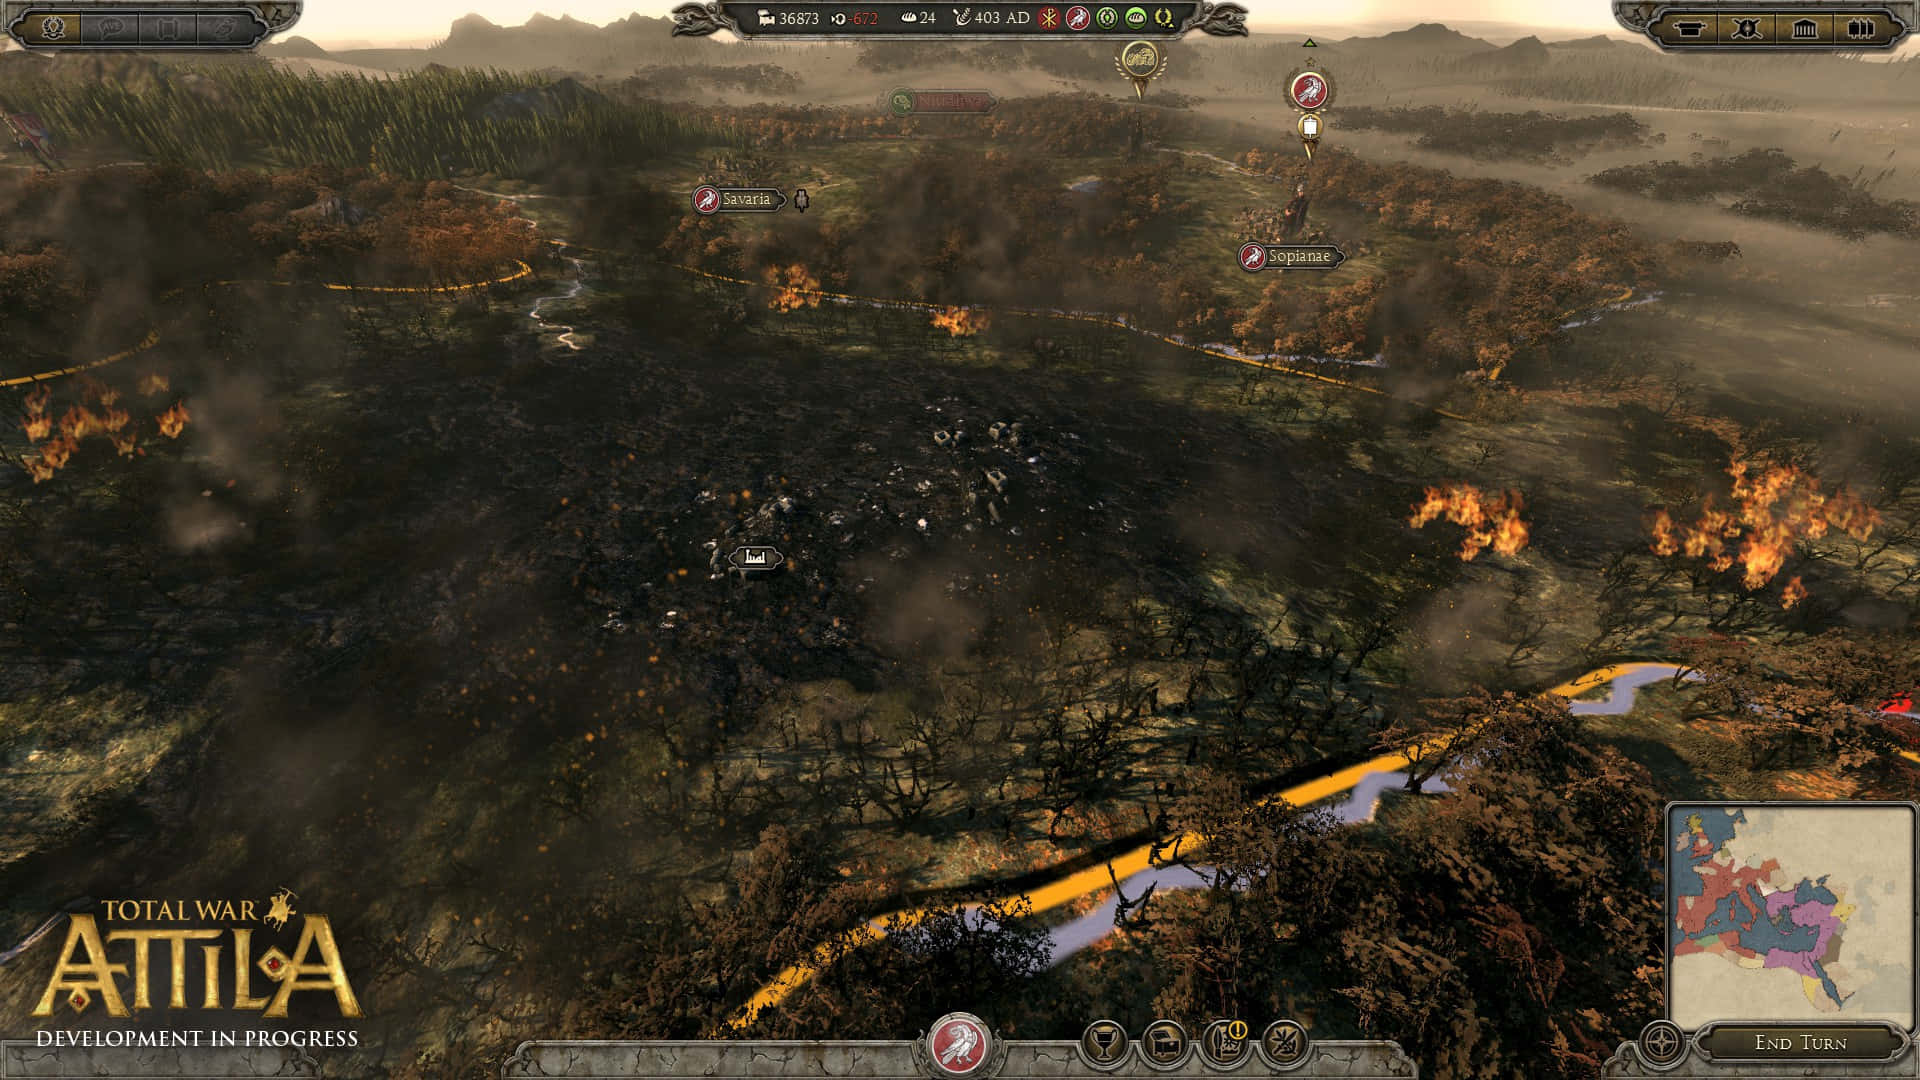 A Screenshot Of The Game Atlas